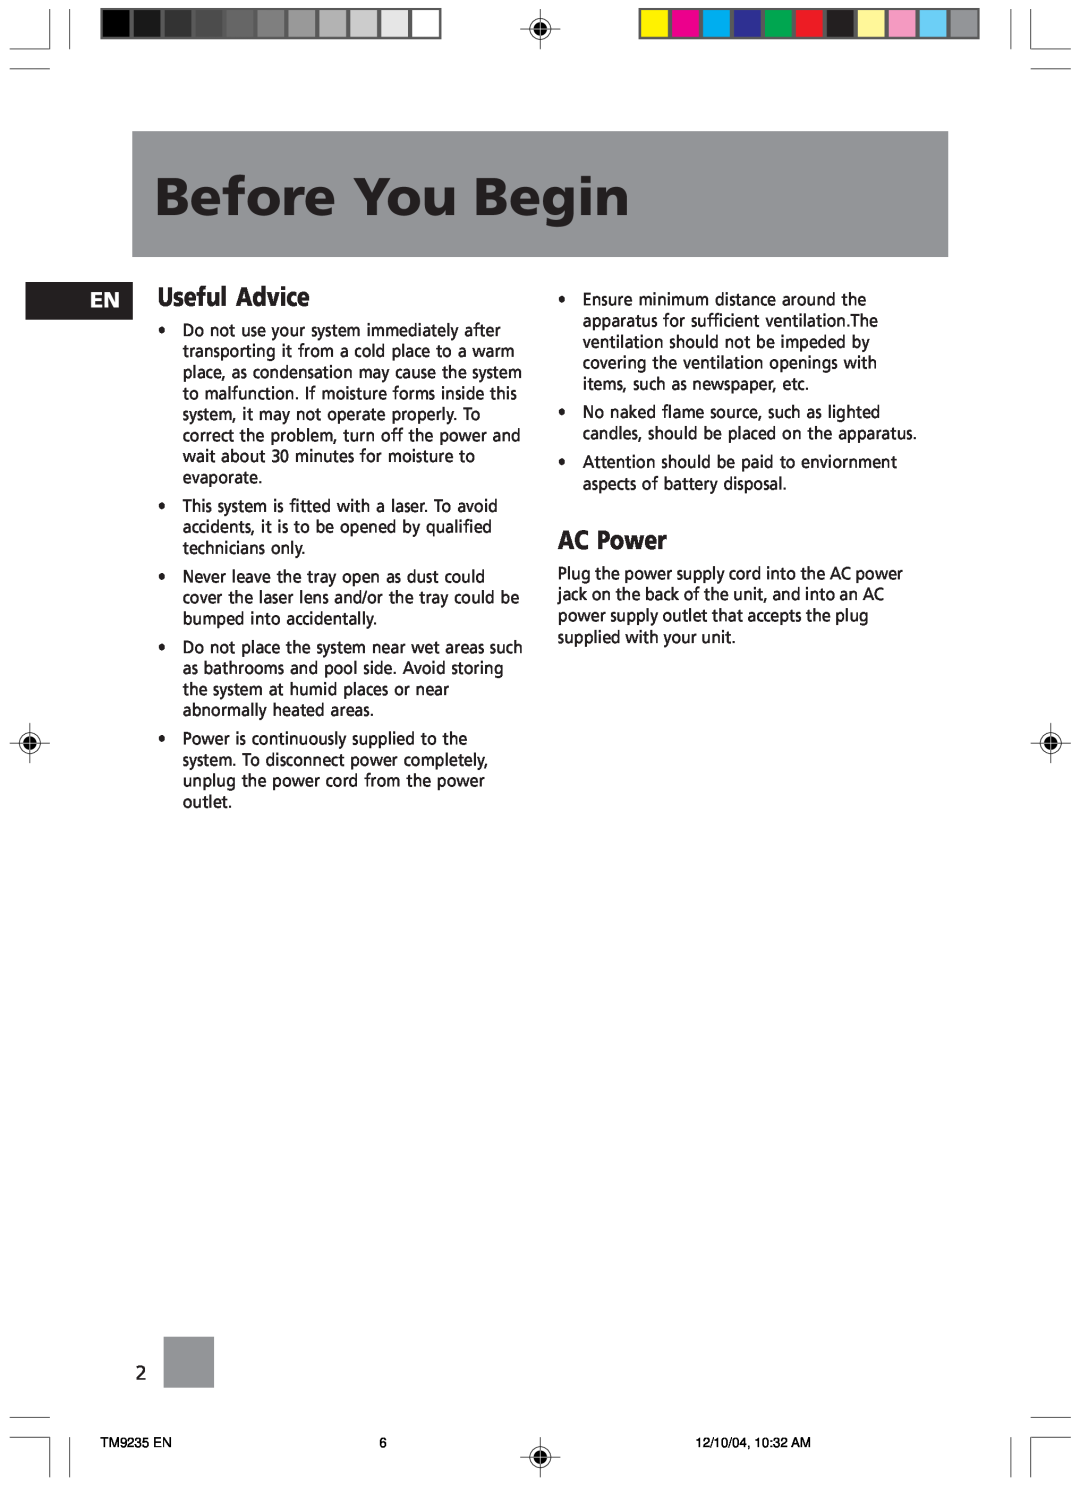 Technicolor - Thomson TM9235 EN manual Before You Begin, Useful Advice, AC Power 